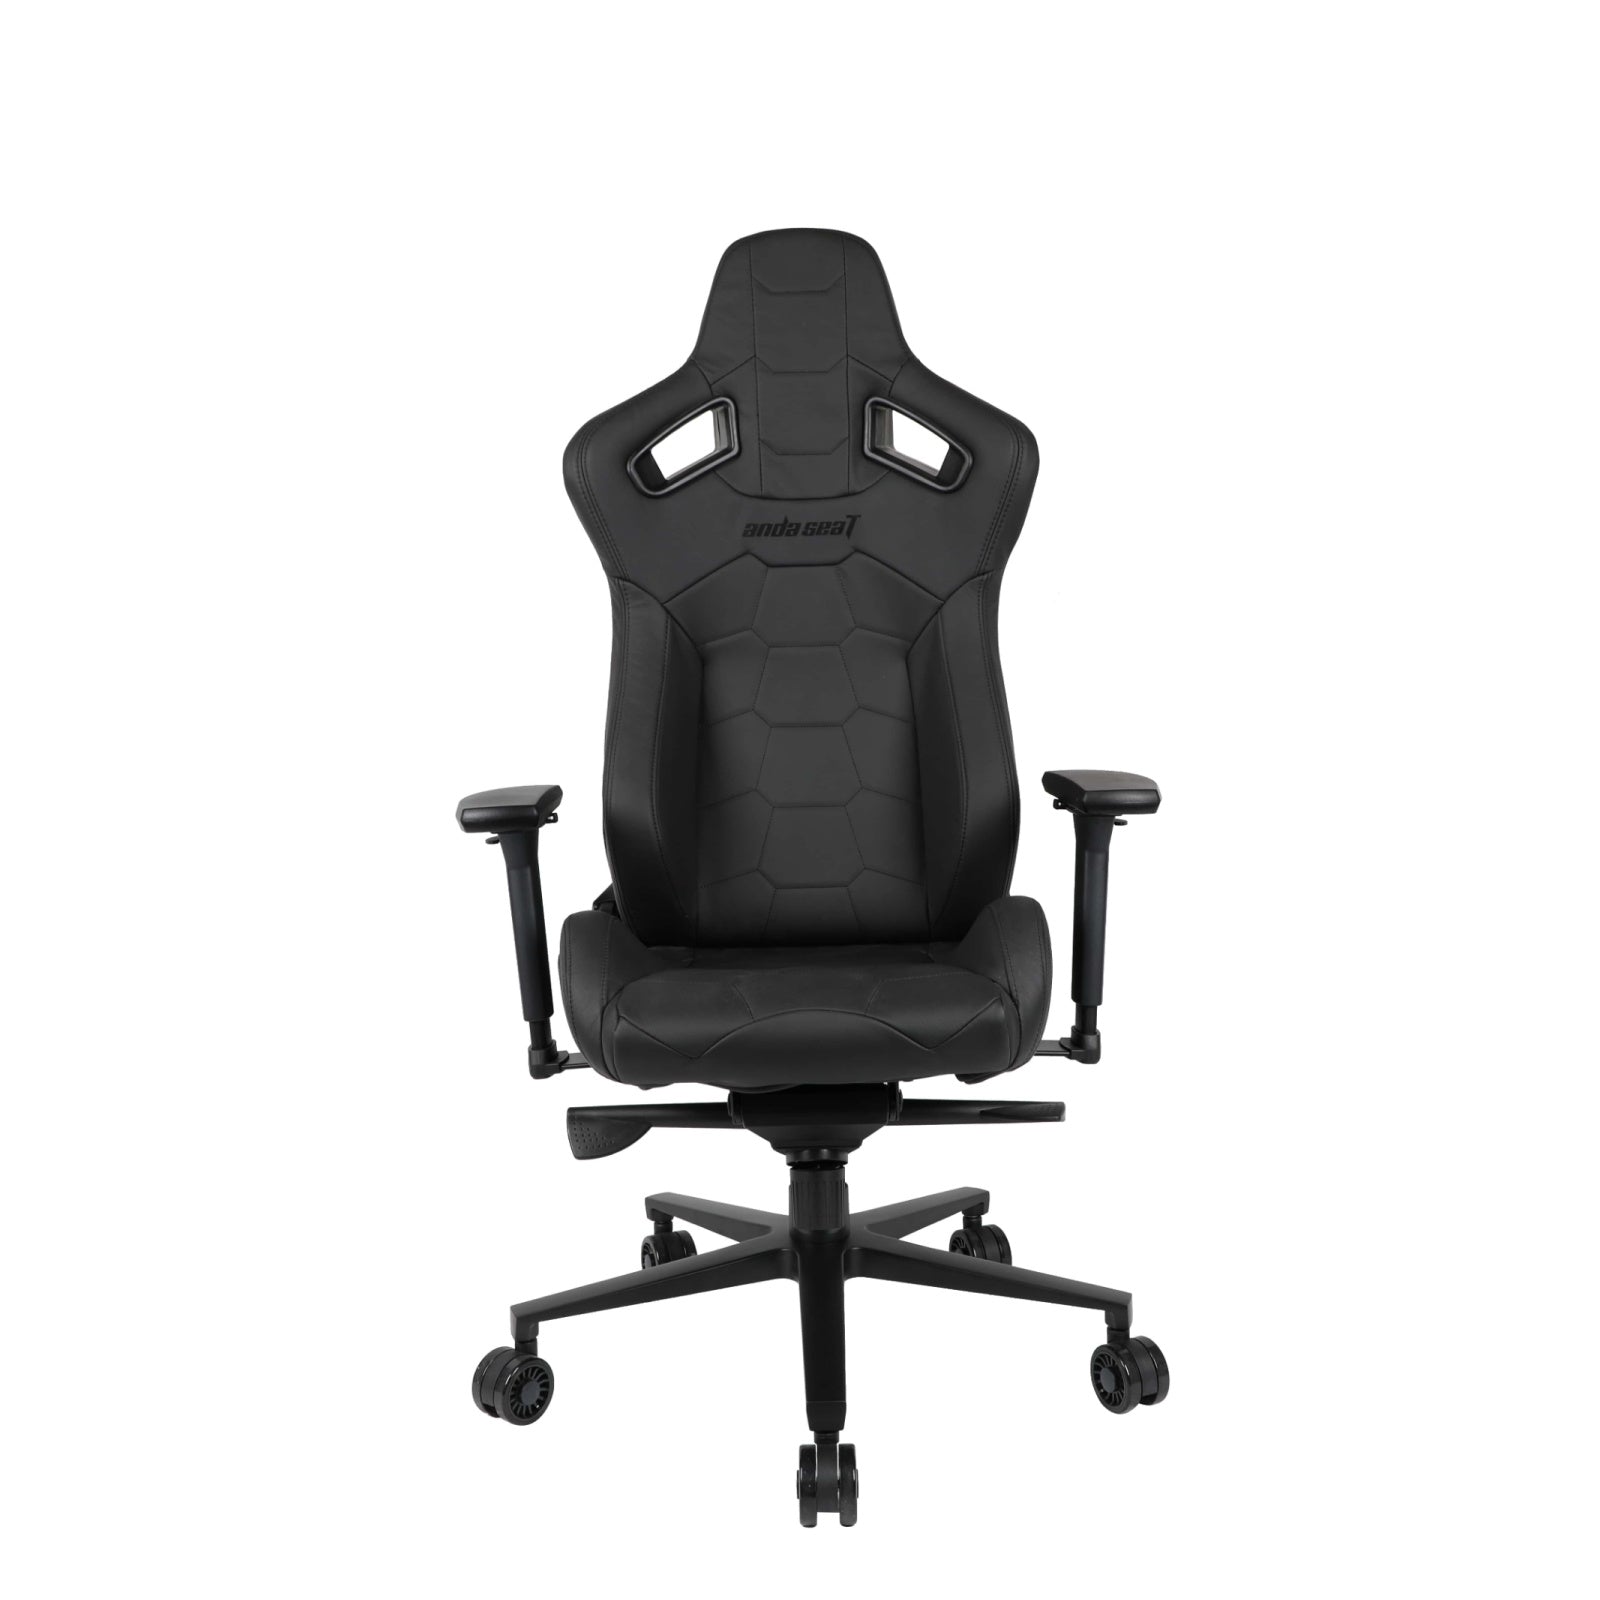 Anda Seat Dracula Napa Leather Black Gaming Chair